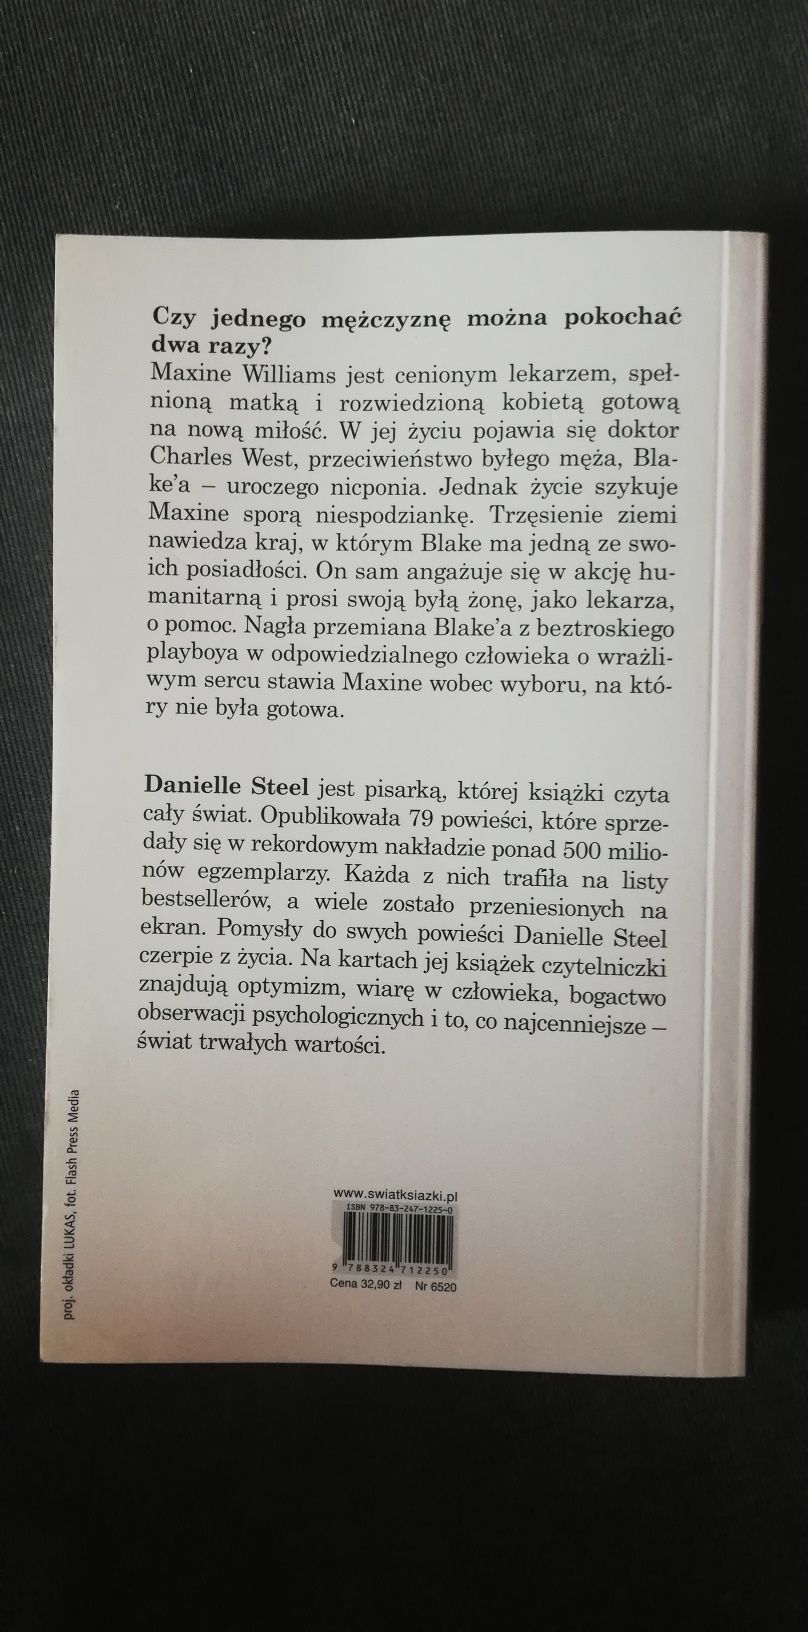 Nicpoń-Danielle Steel